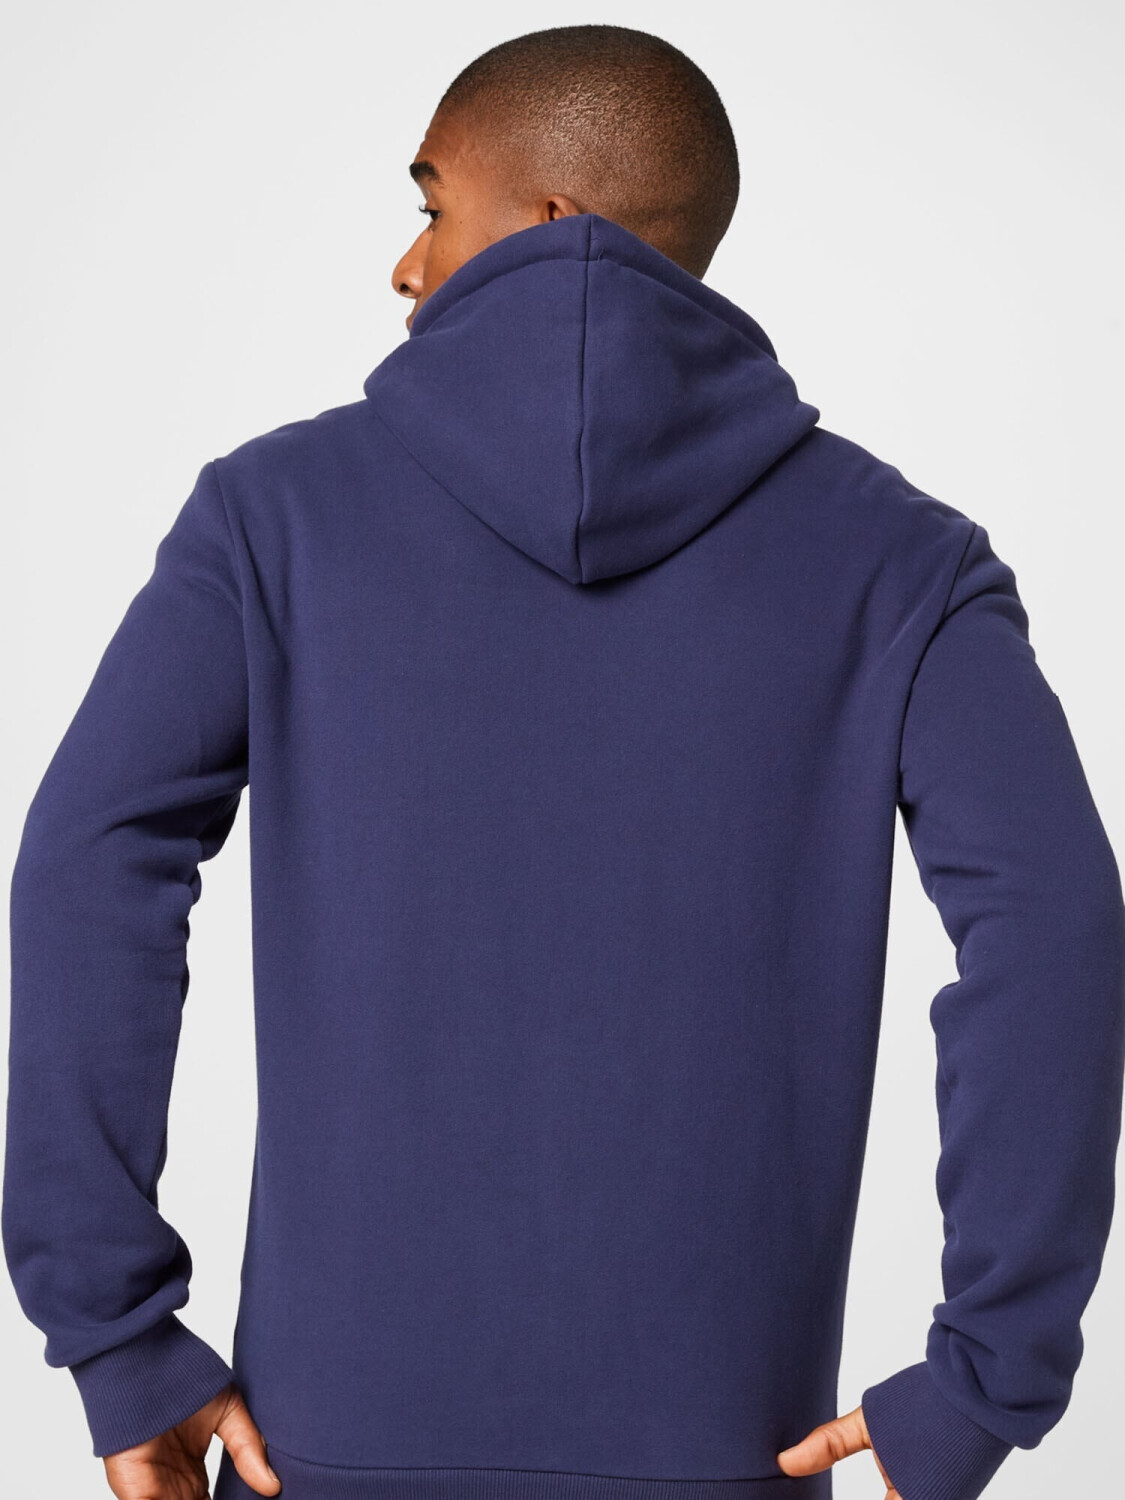 44,49 € Vintage (M2011851A-GKV) ab Zip Superdry Full Sweatshirt blau Seasonal Cl bei | Preisvergleich